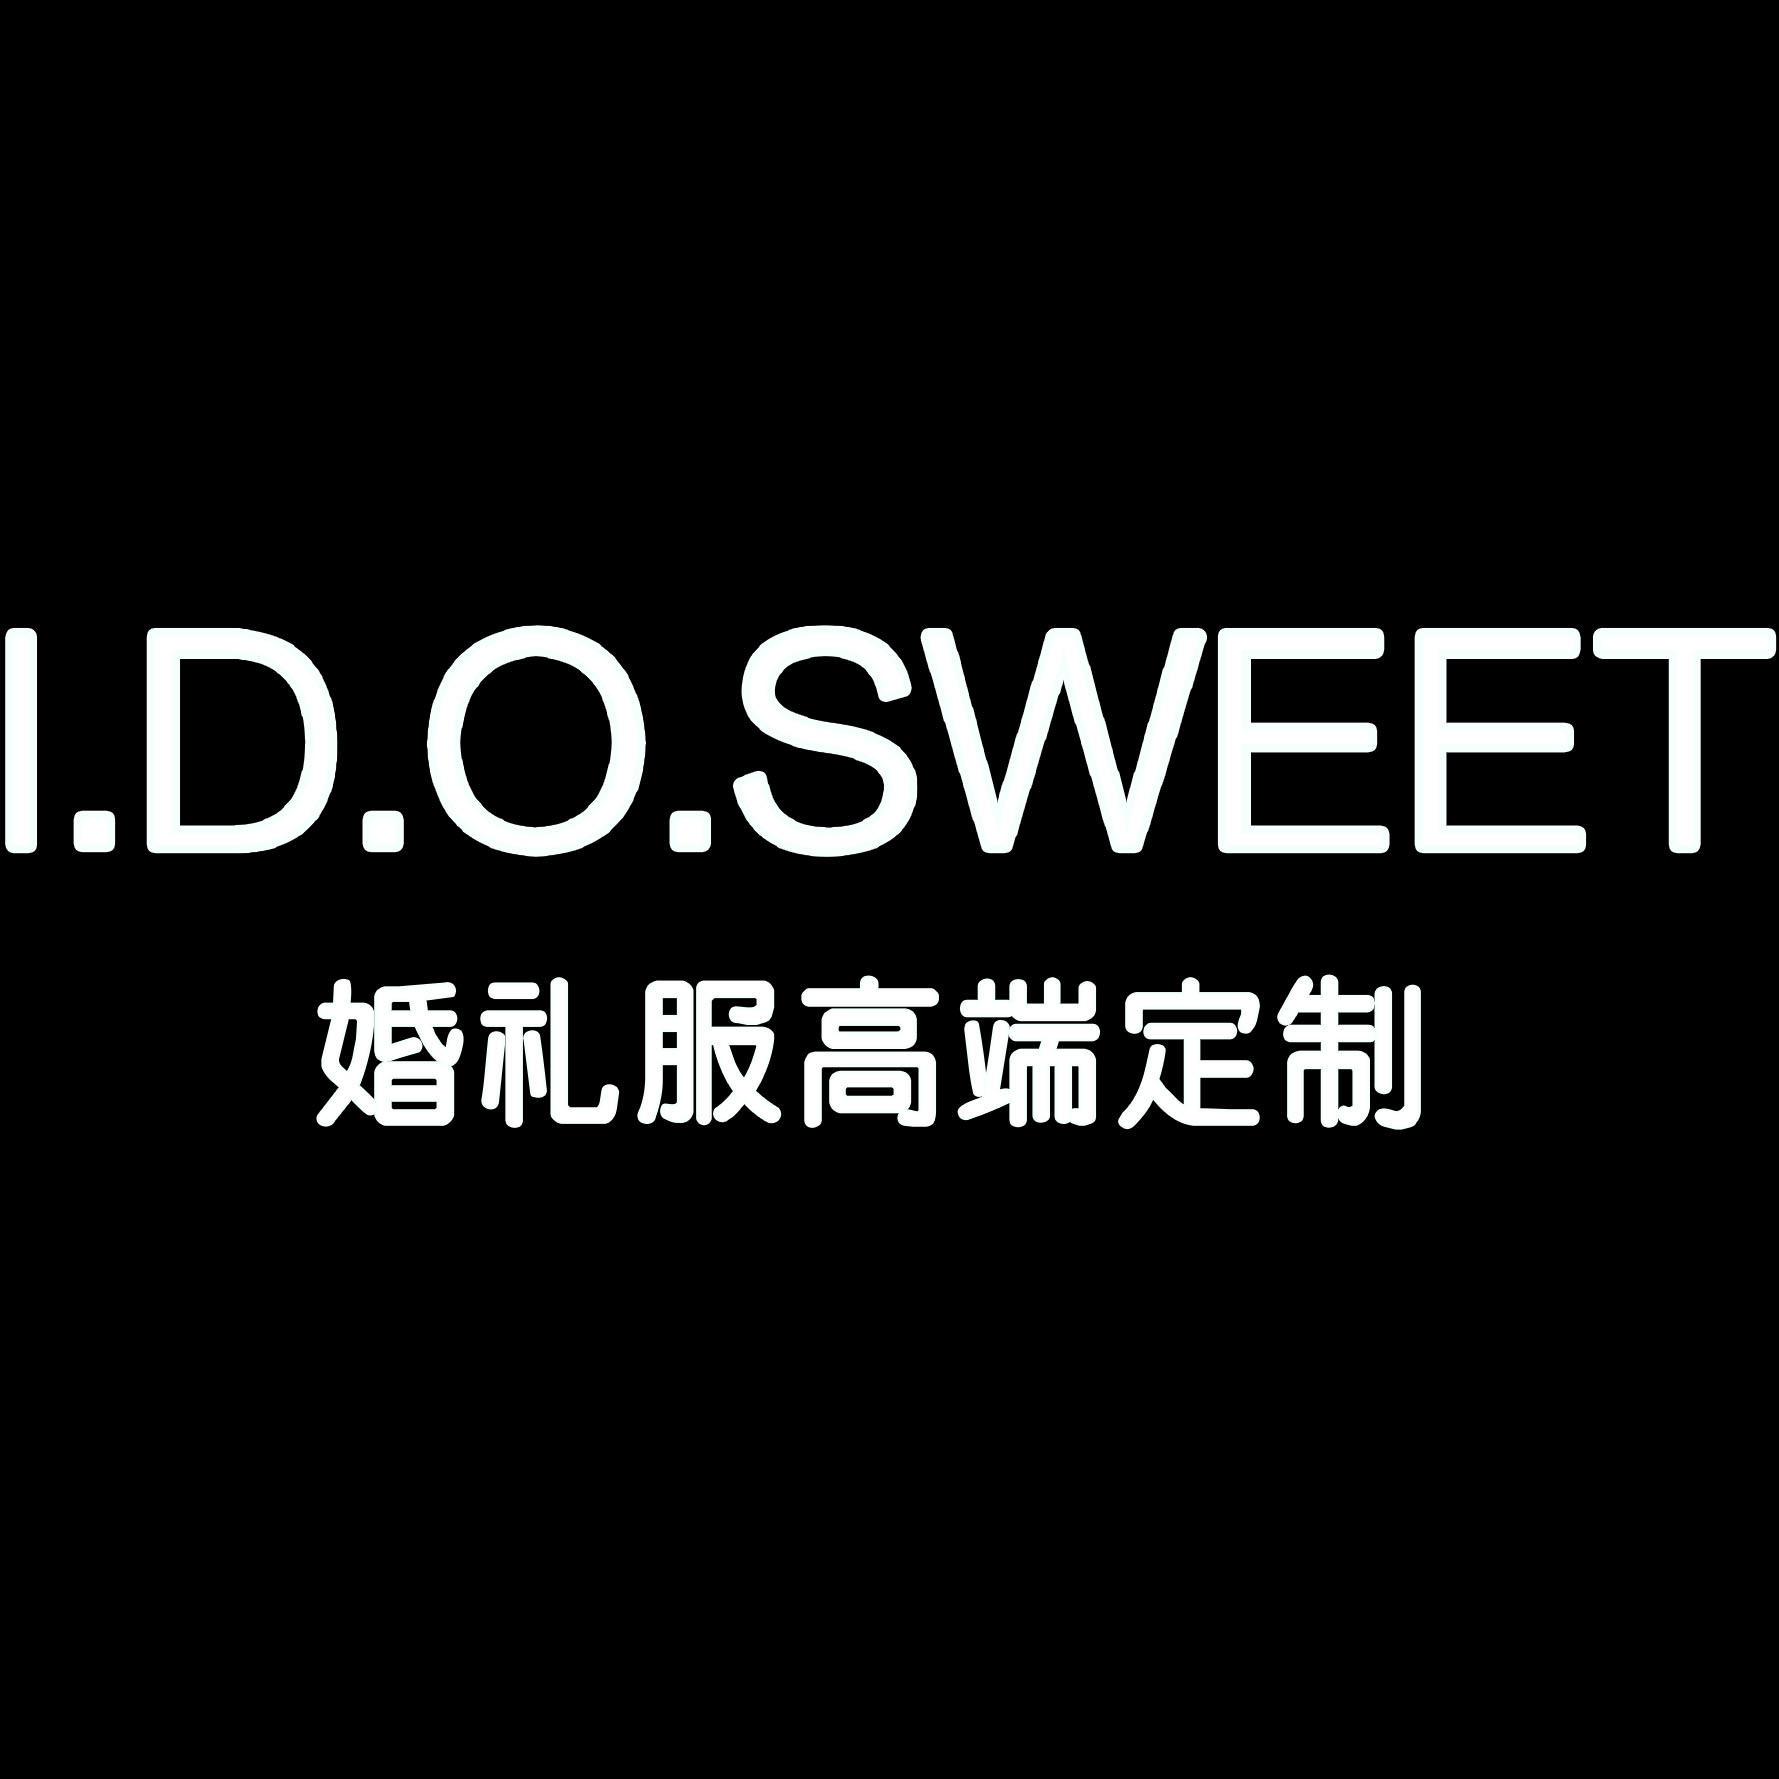 I.D.O.SWEET美妆